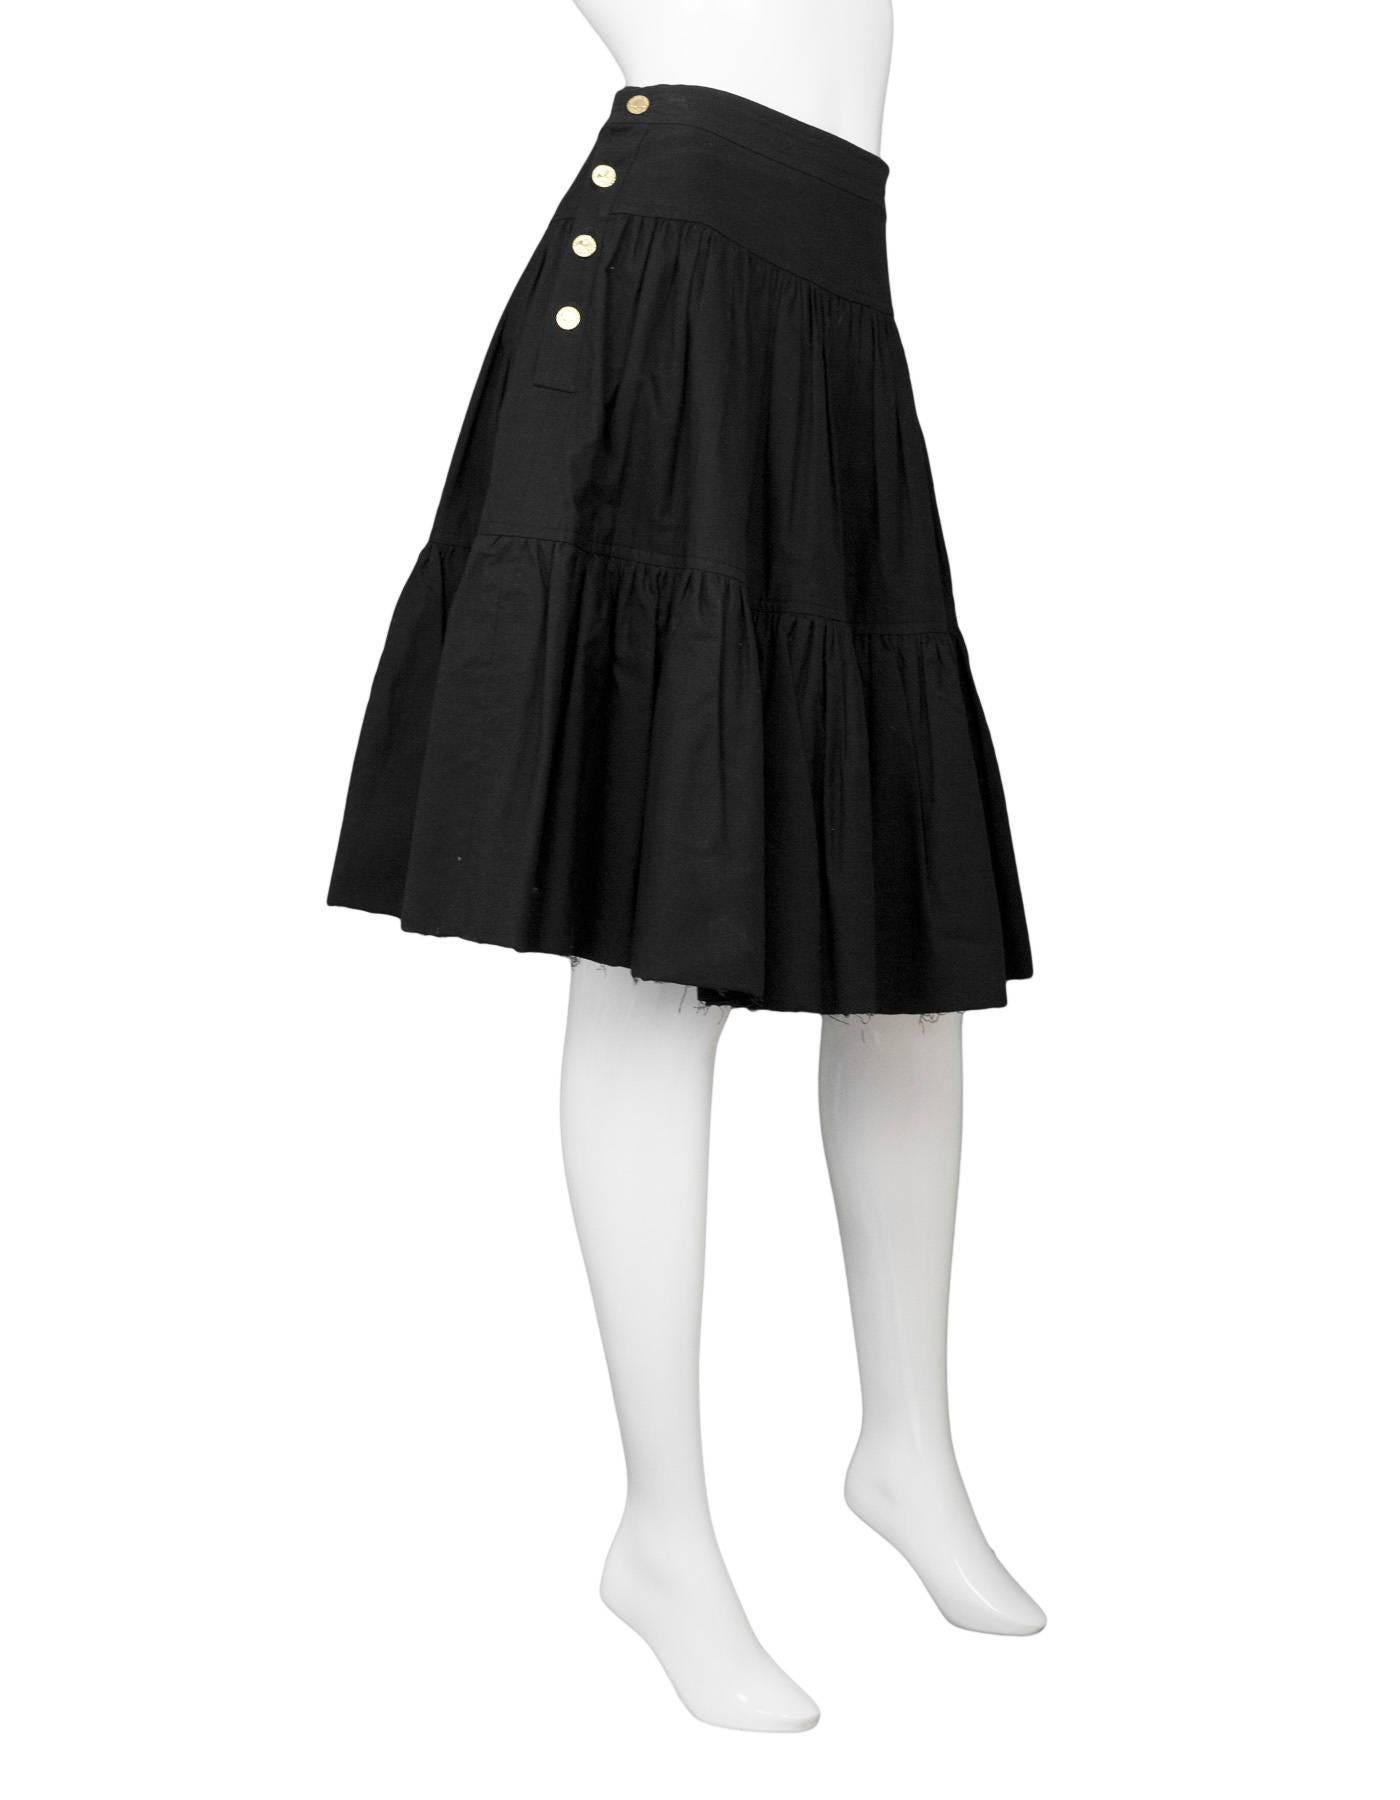 Women's Chanel Black Cotton 2-Tier Skirt sz M